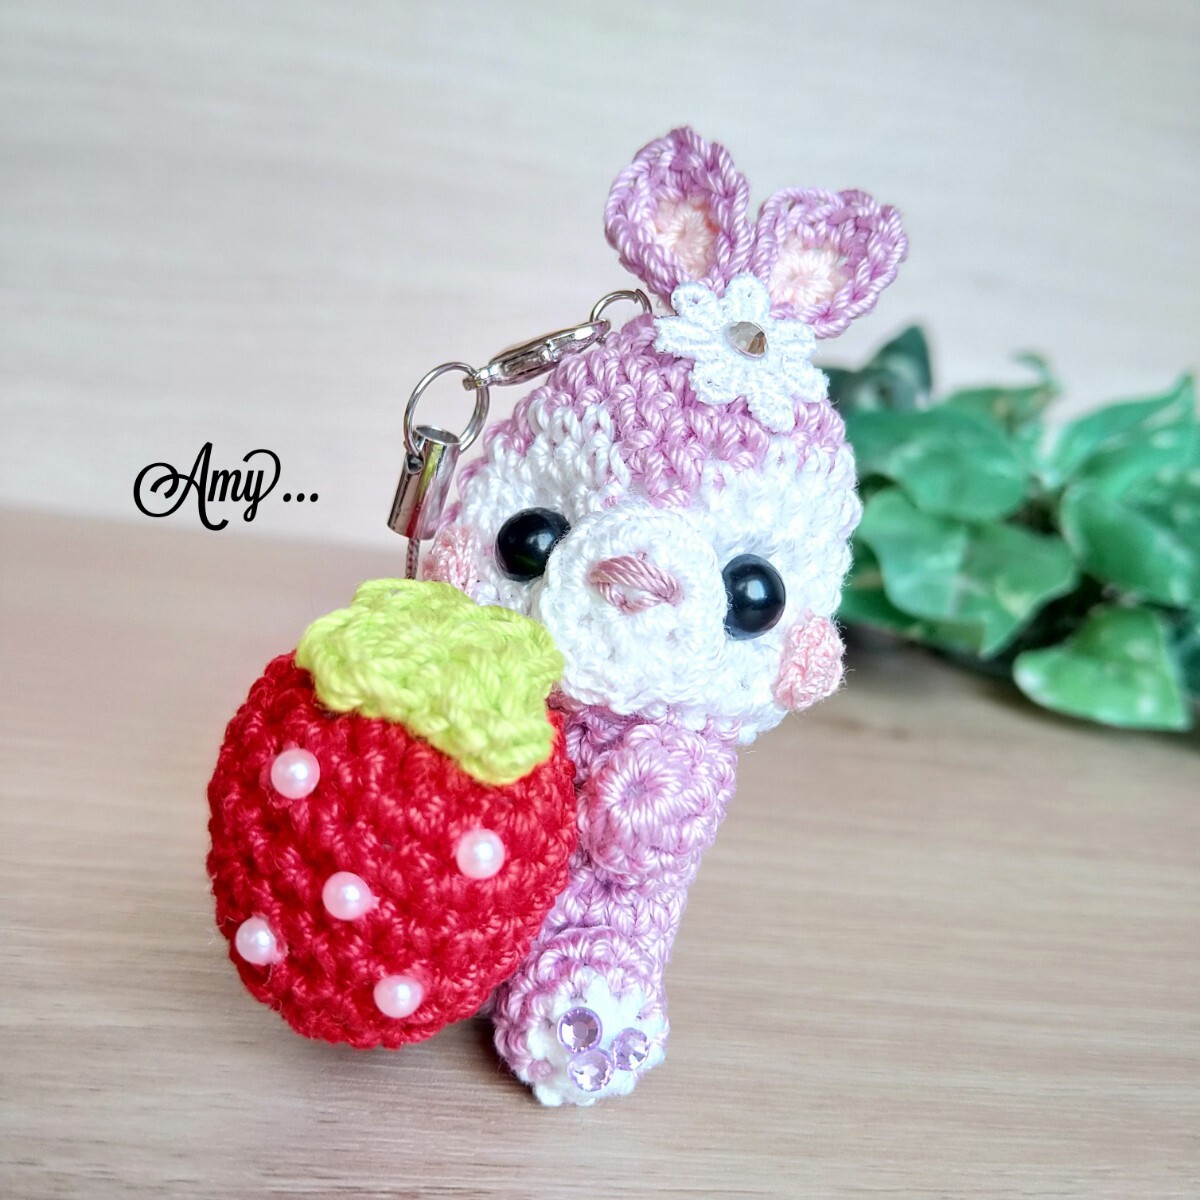 ■Amy... Amigurumi Plump Pearl Strawberry Hug★Strap♪Purple Free Shipping Handmade♪, toy, game, stuffed toy, Amigurumi